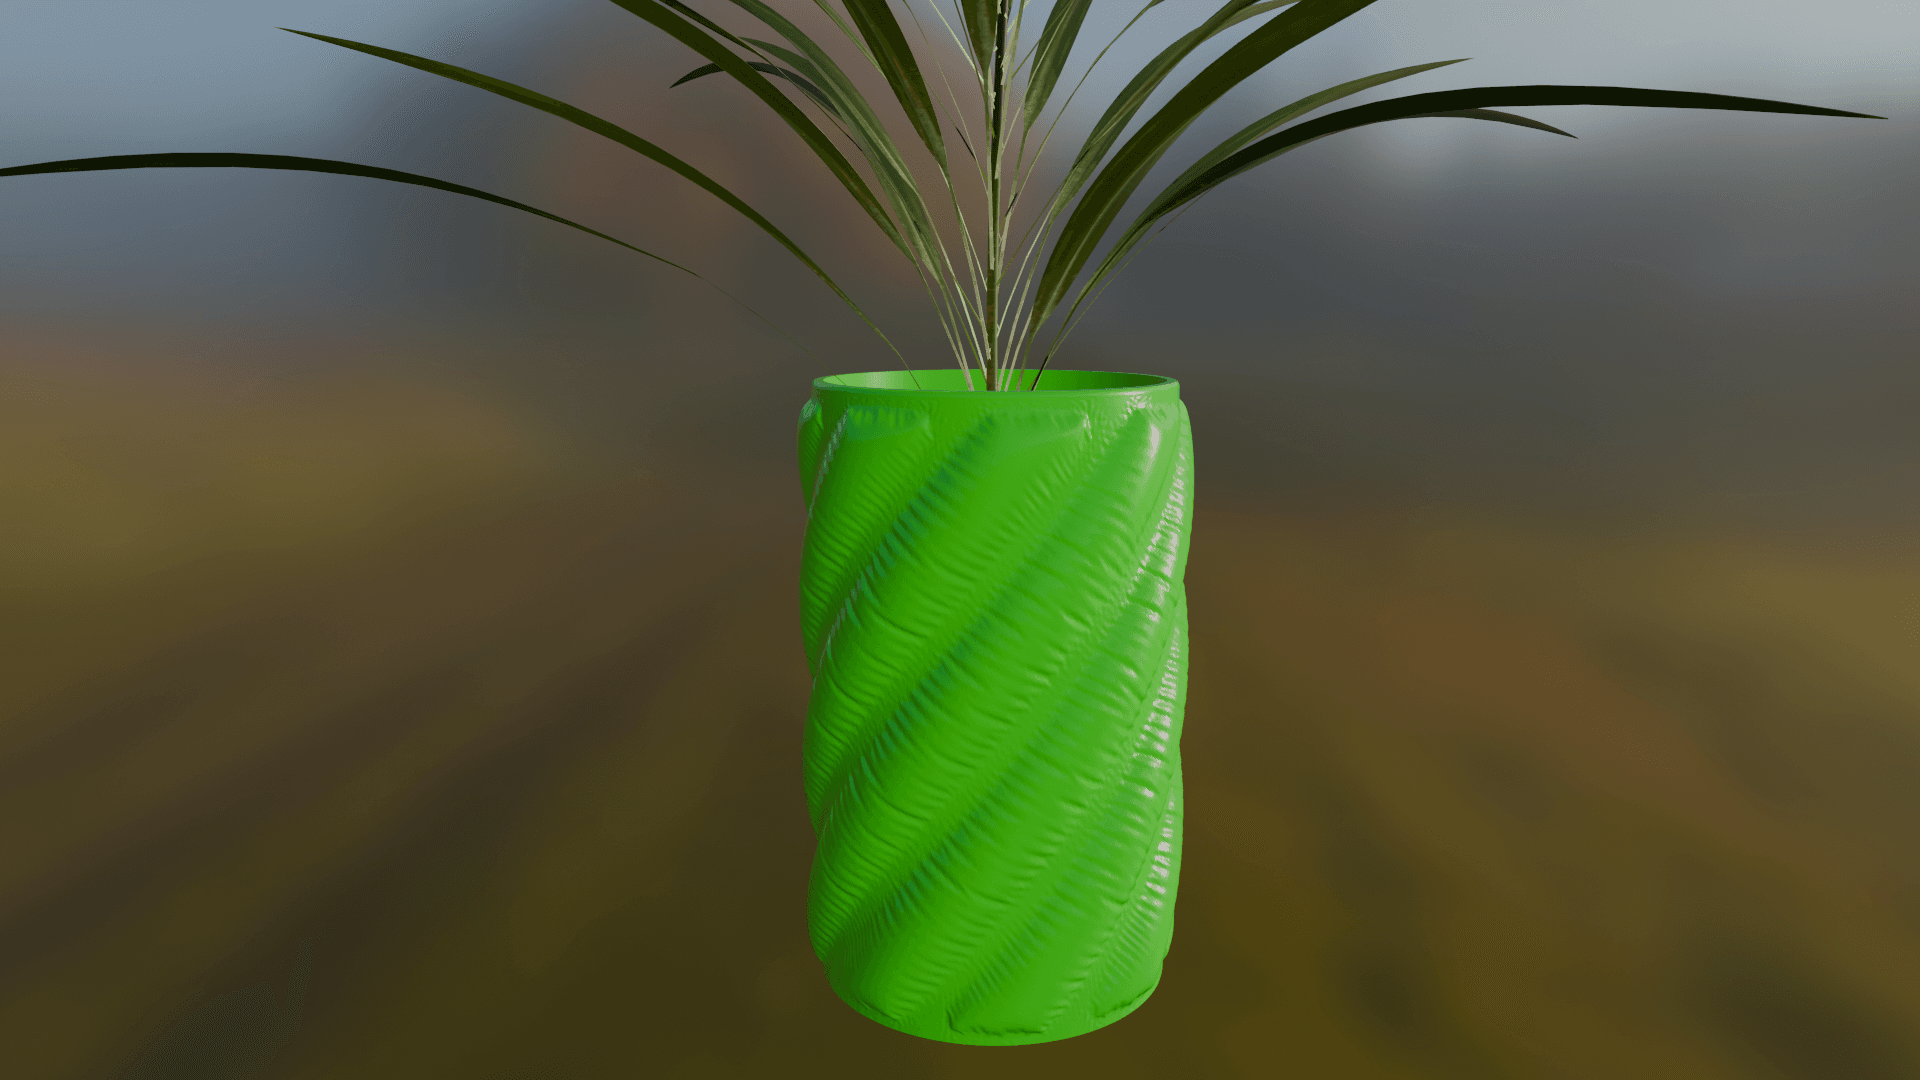 Pillow Vase Mod 3 3d model